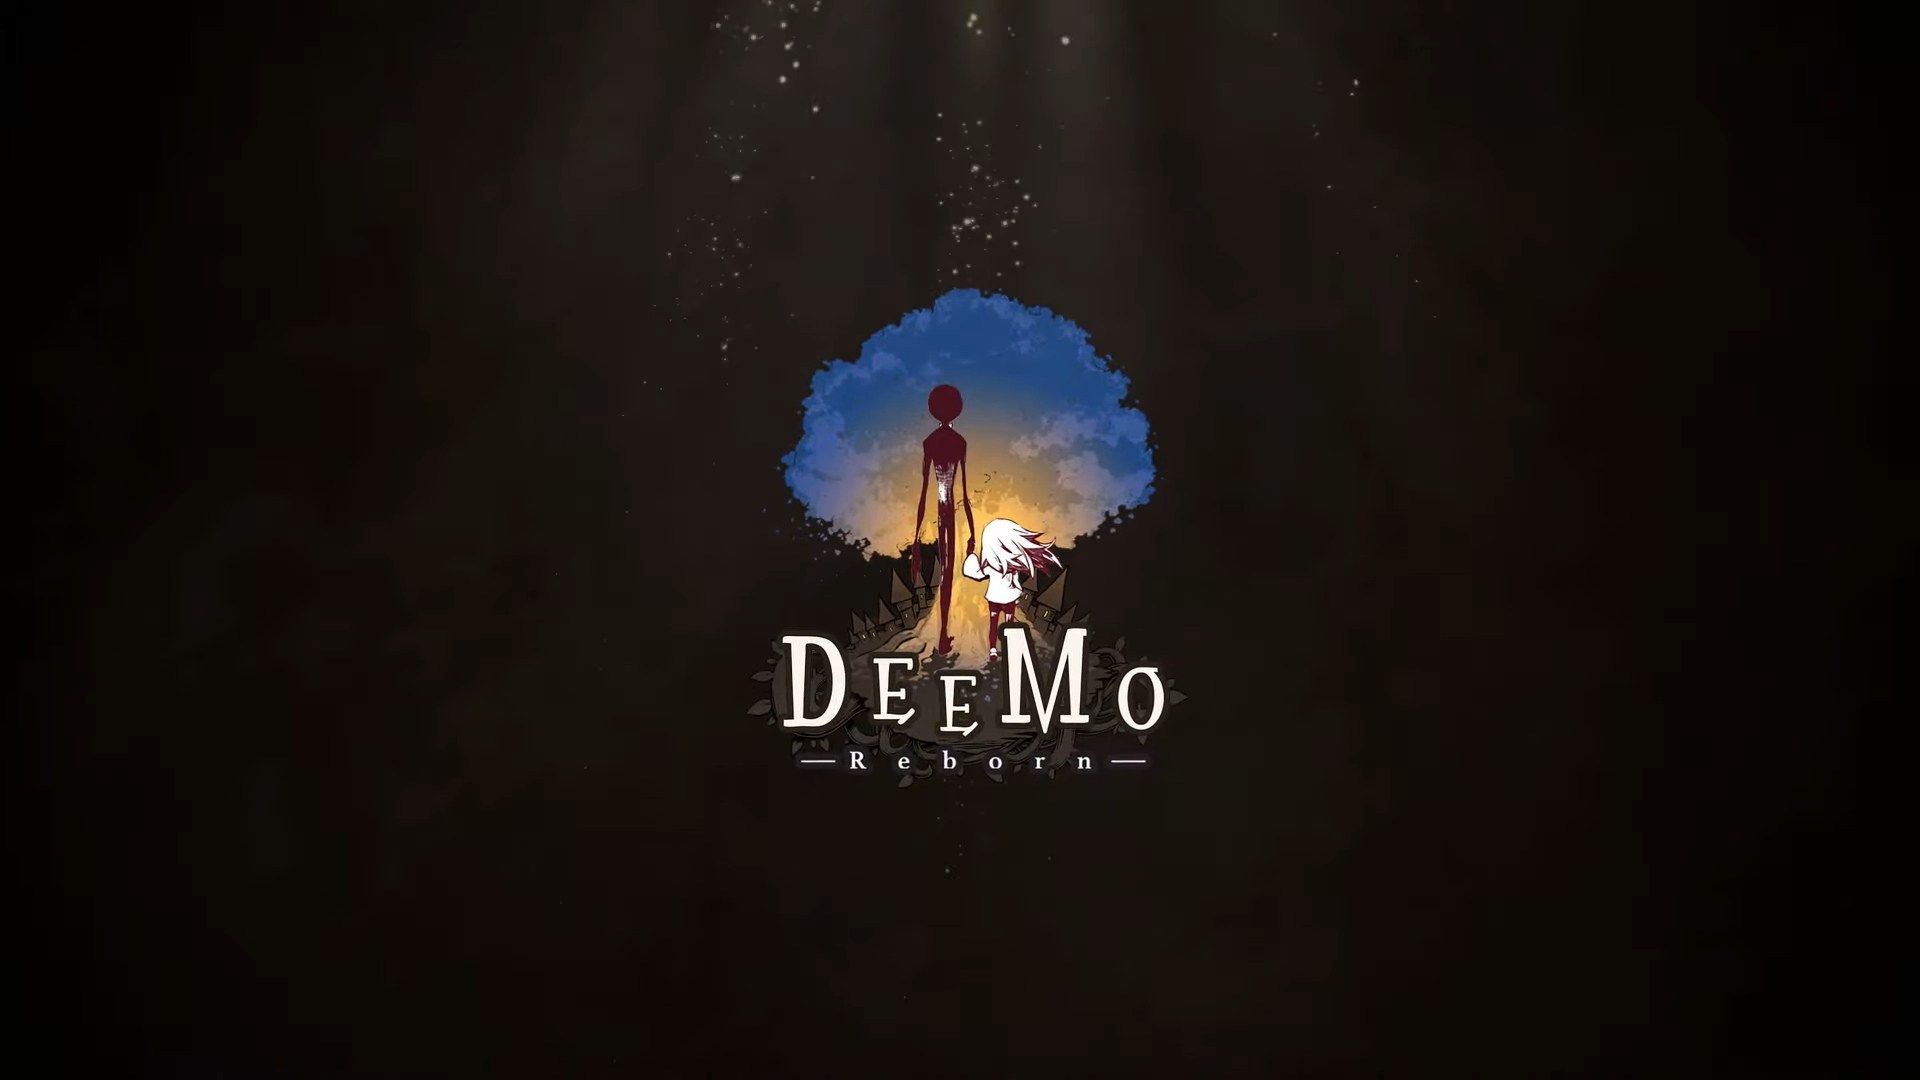 Deemo Reborn coming to Japan this November!